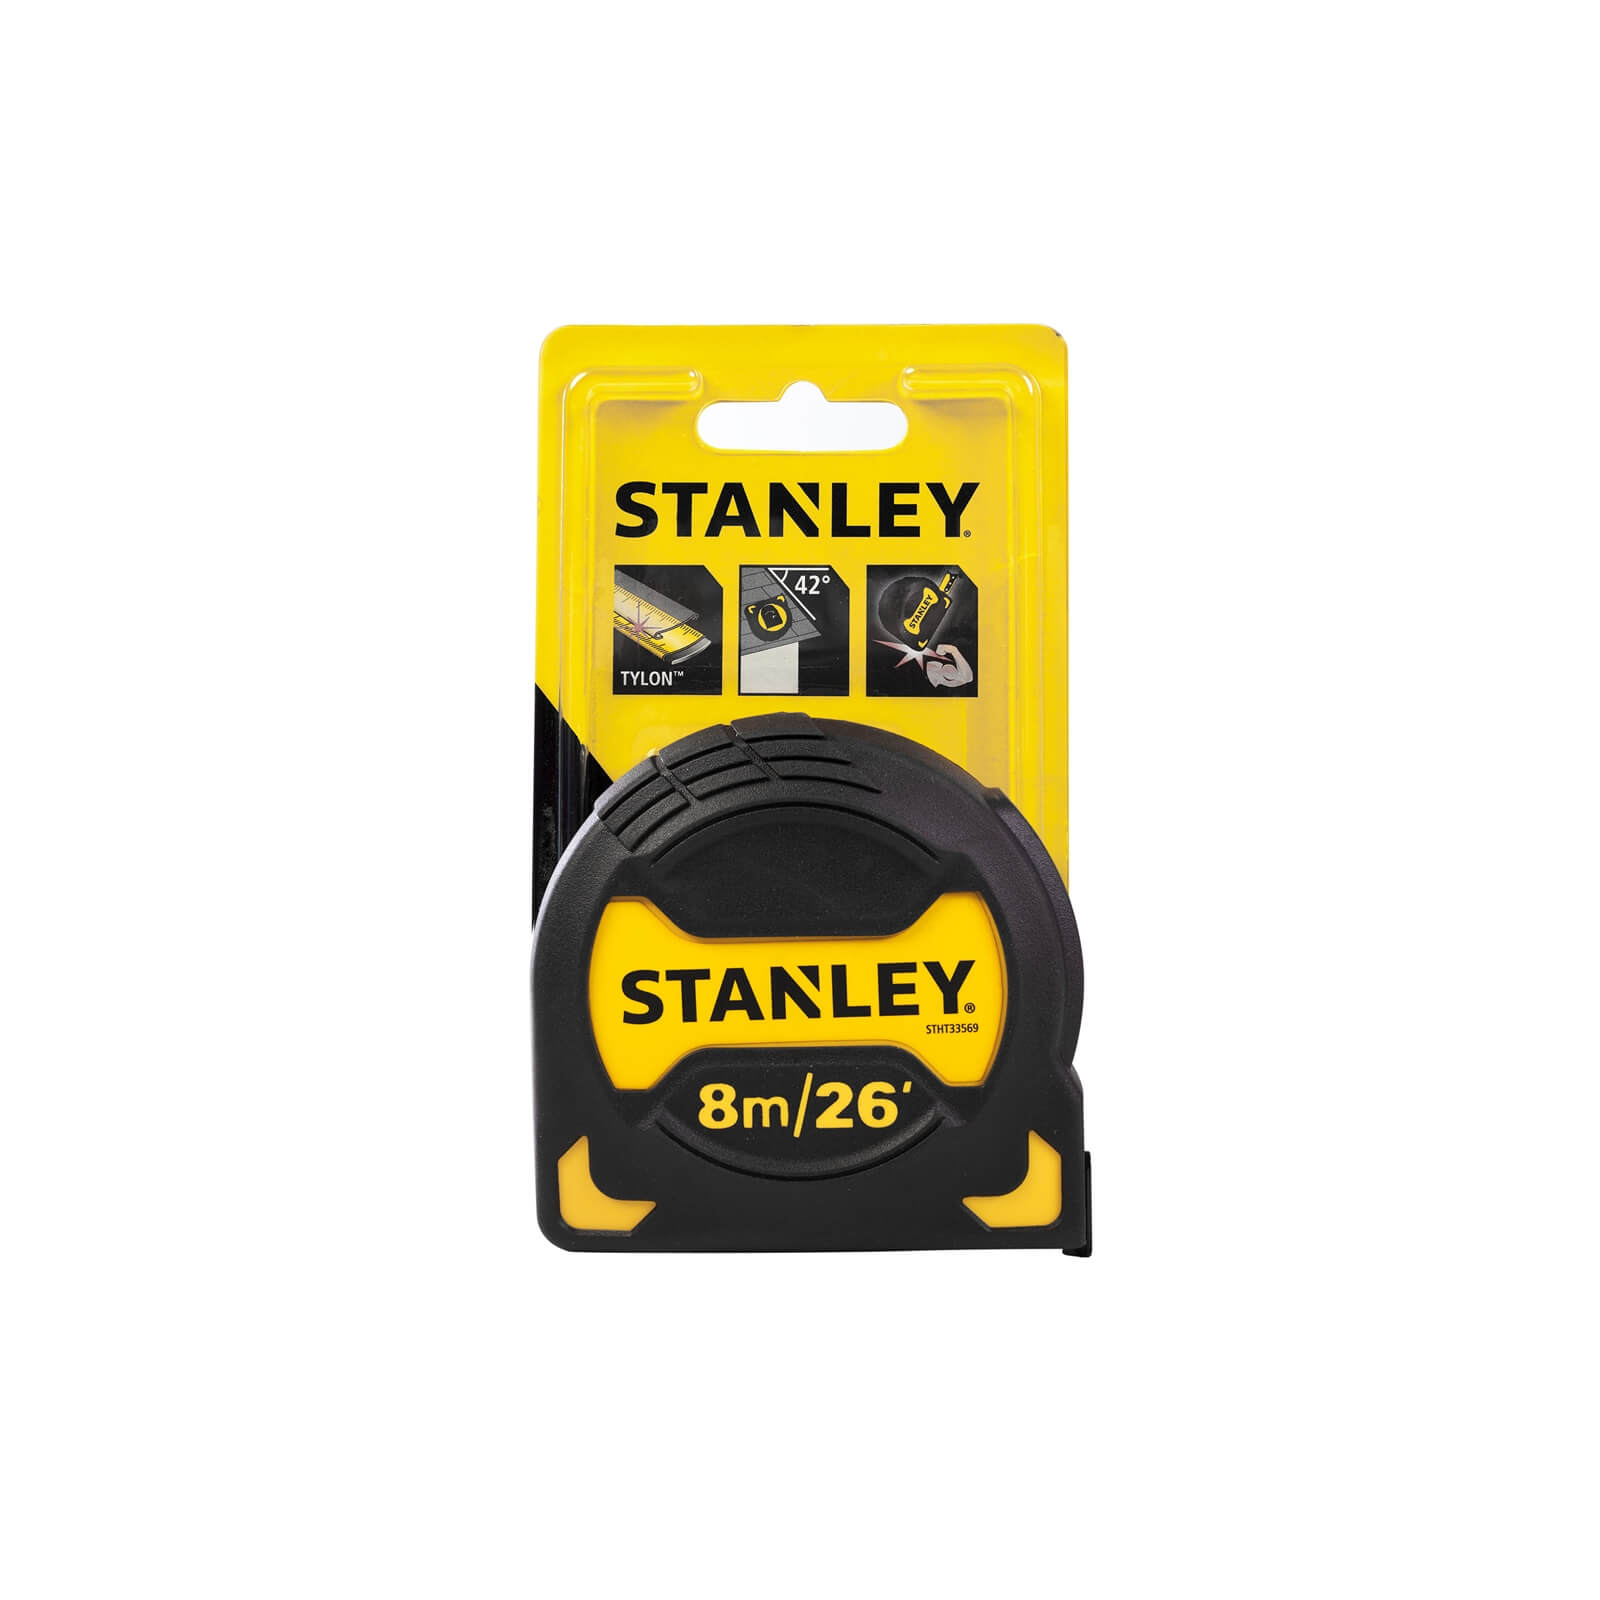 Stanley Grip Tape - 8m